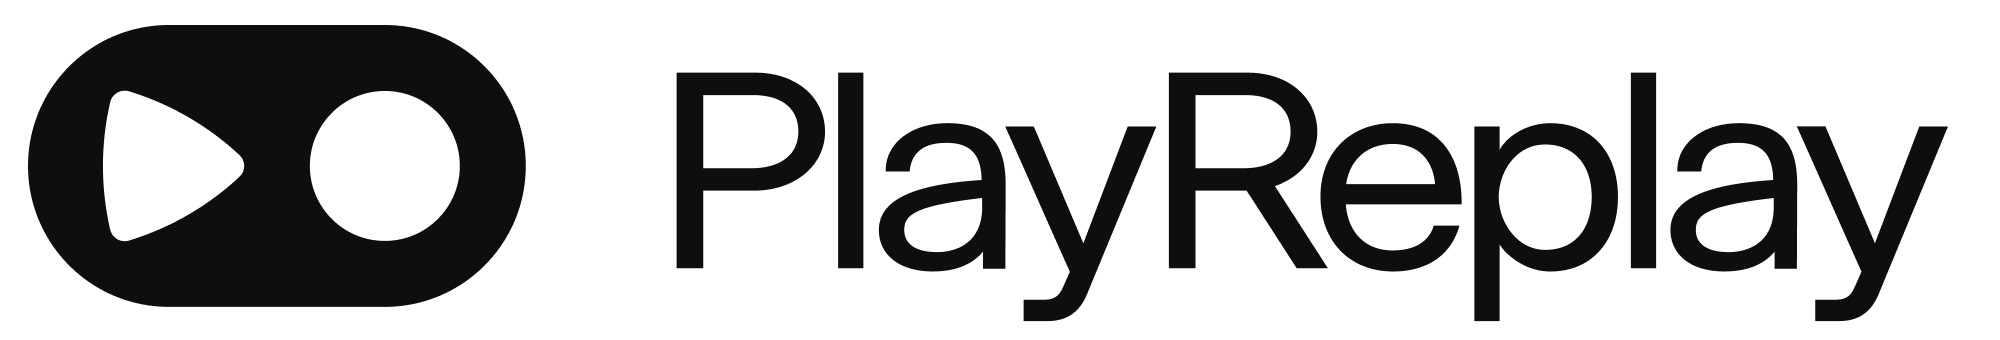 Company logo for PlayReplay